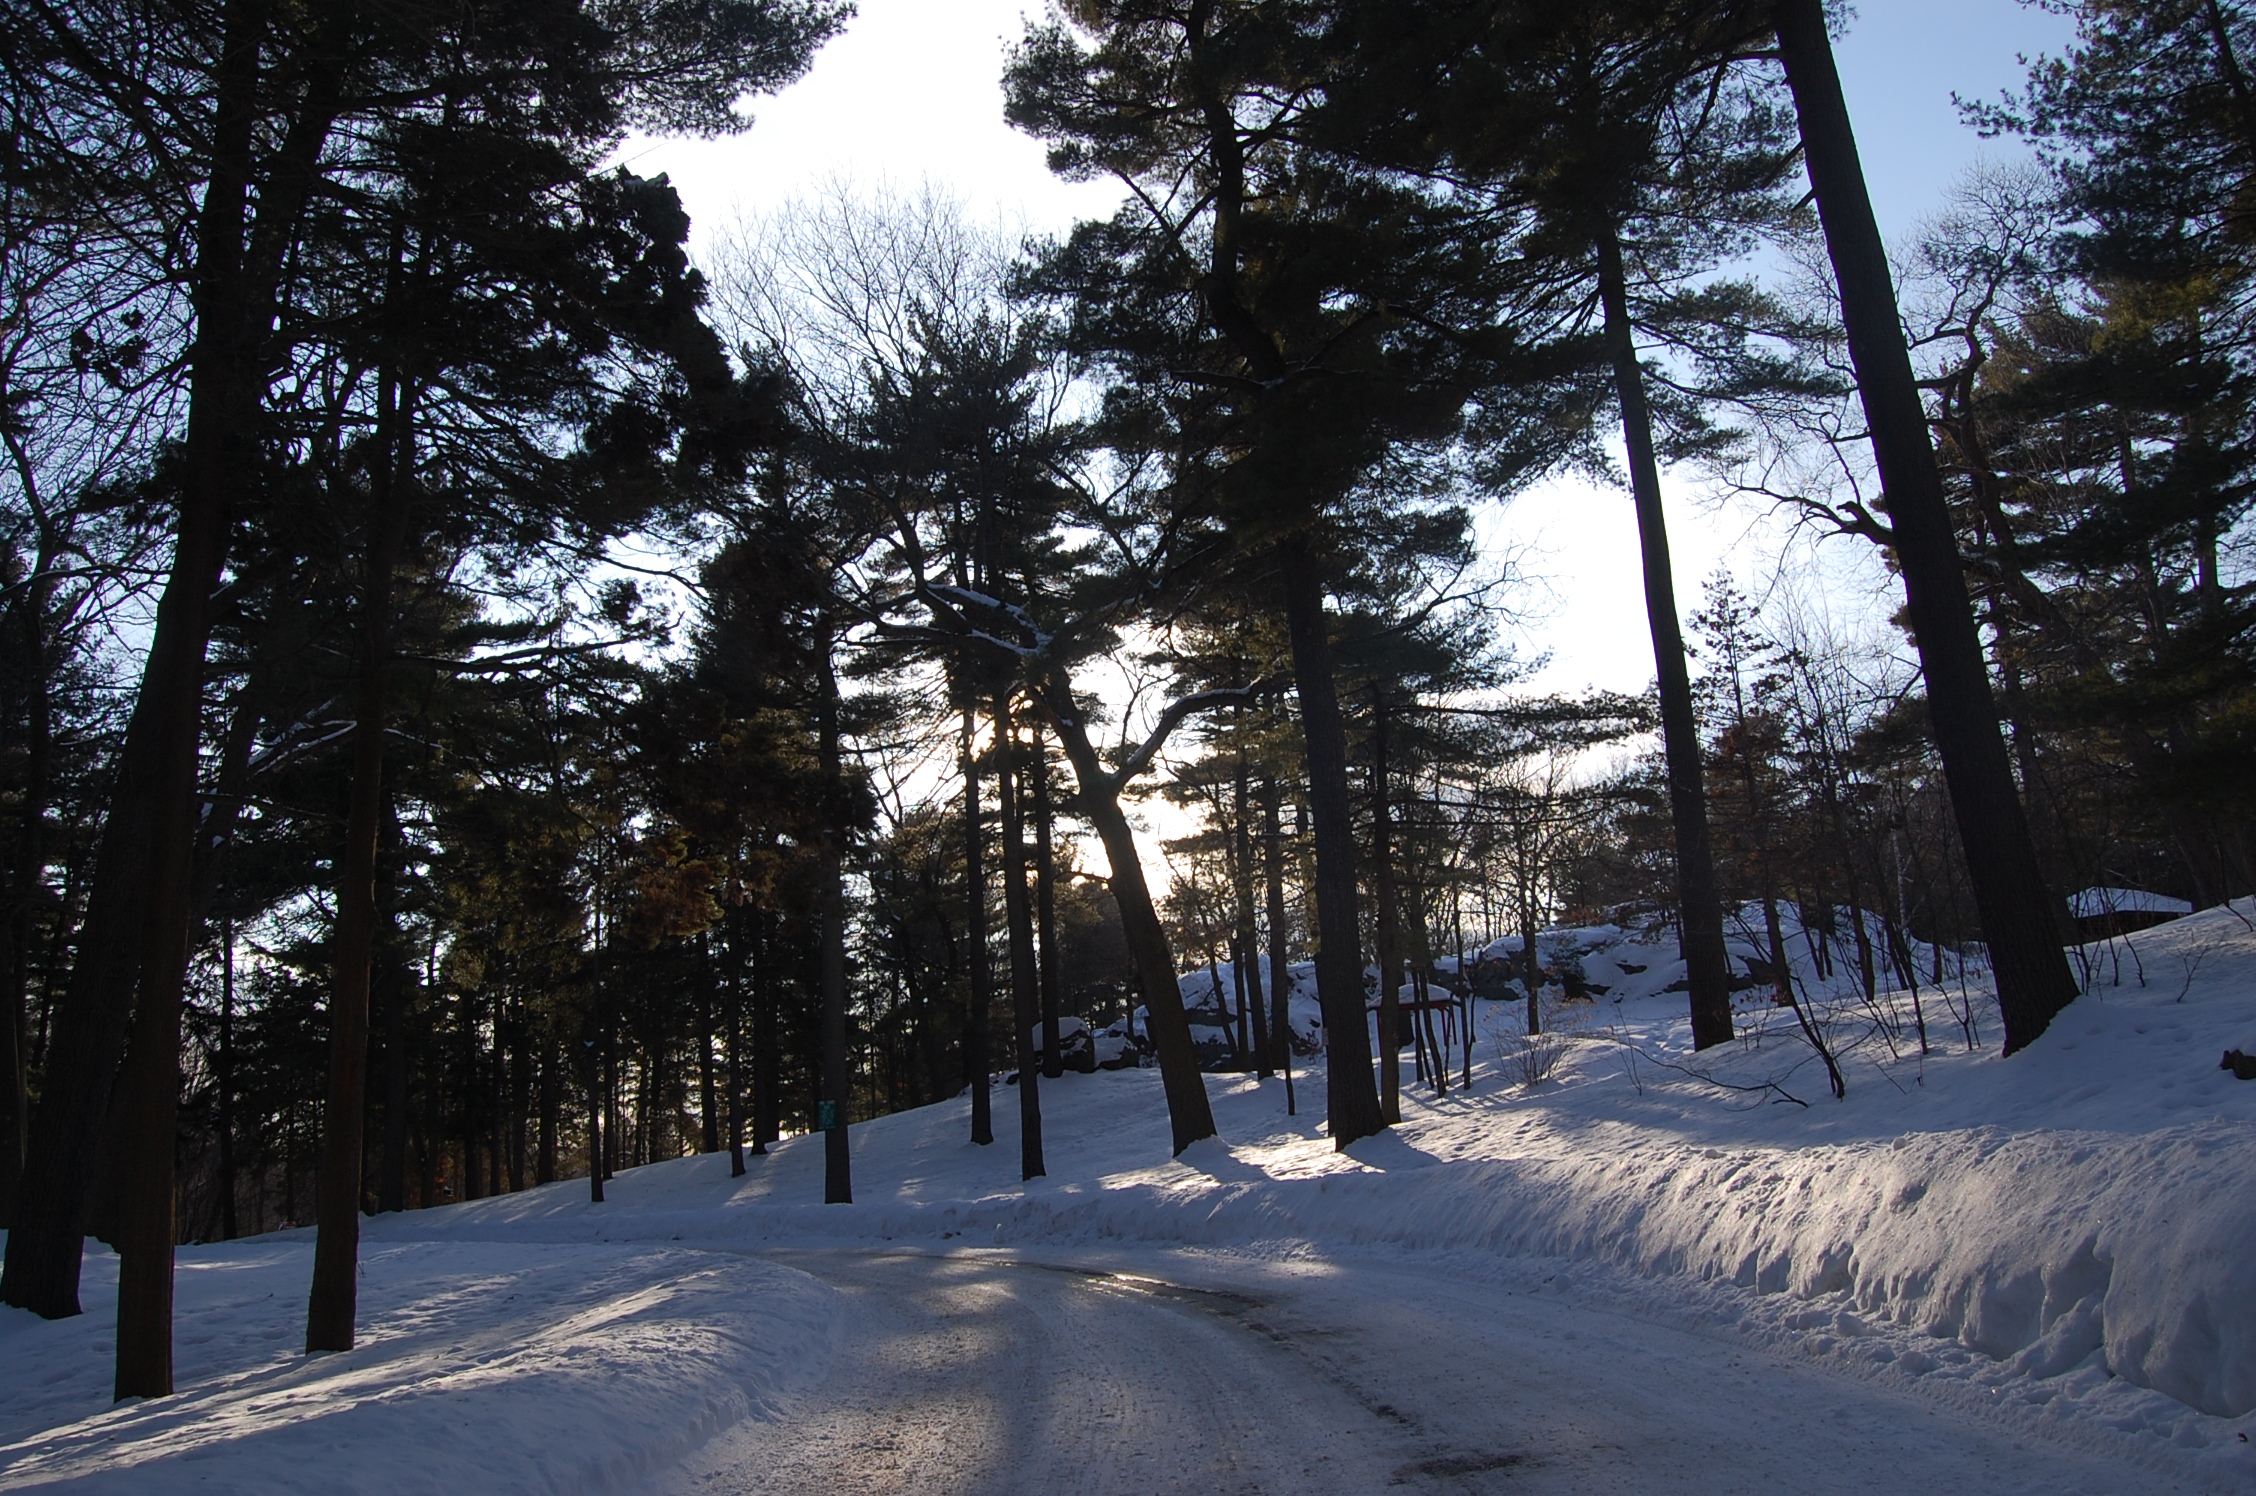 Winter at Pine Banks Park - Pine Banks Park